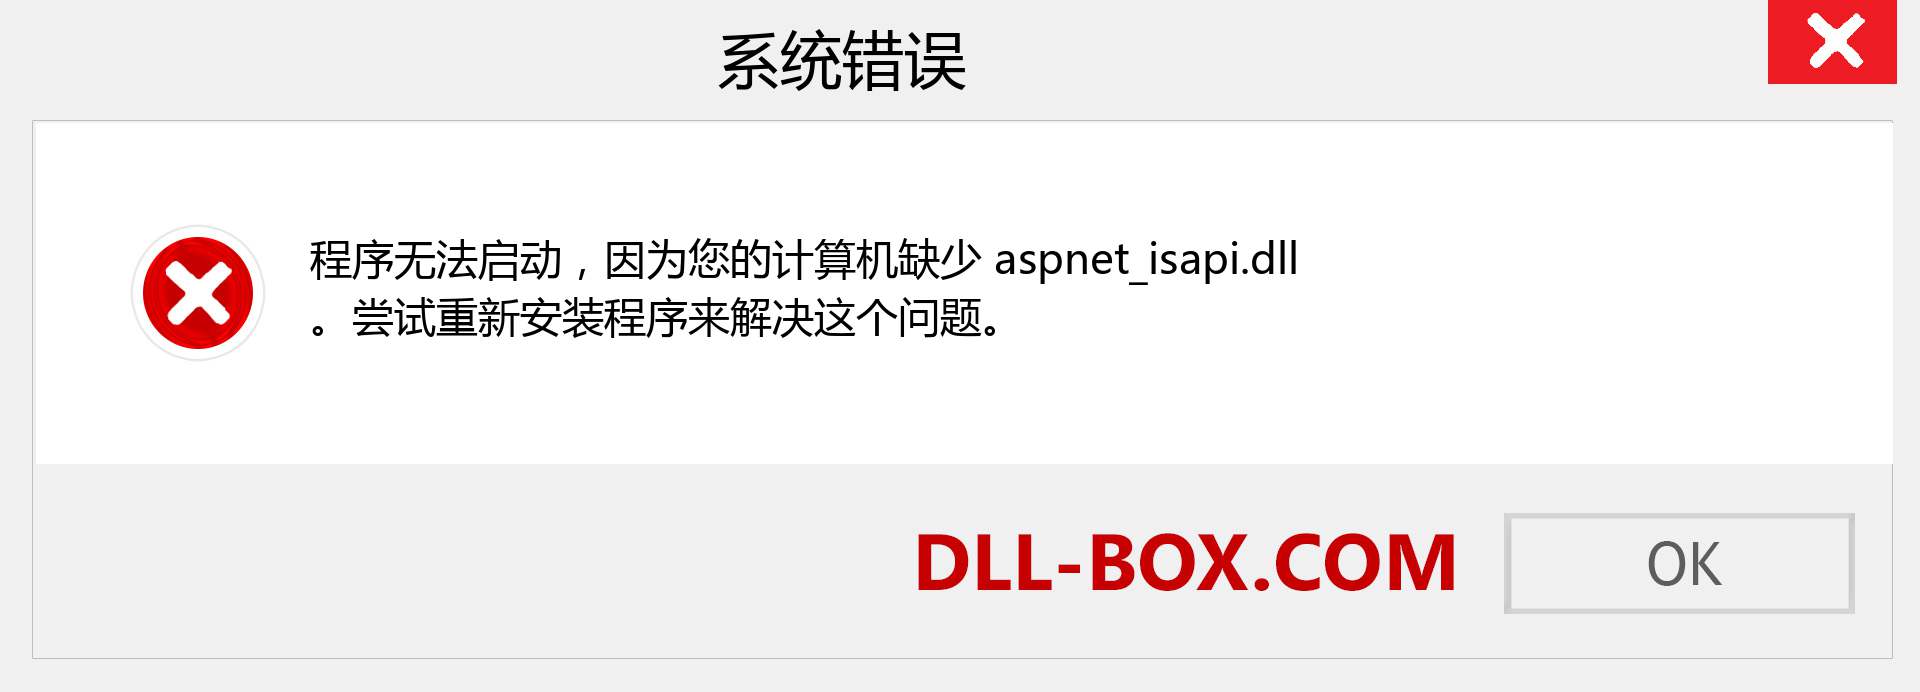 aspnet_isapi.dll 文件丢失？。 适用于 Windows 7、8、10 的下载 - 修复 Windows、照片、图像上的 aspnet_isapi dll 丢失错误